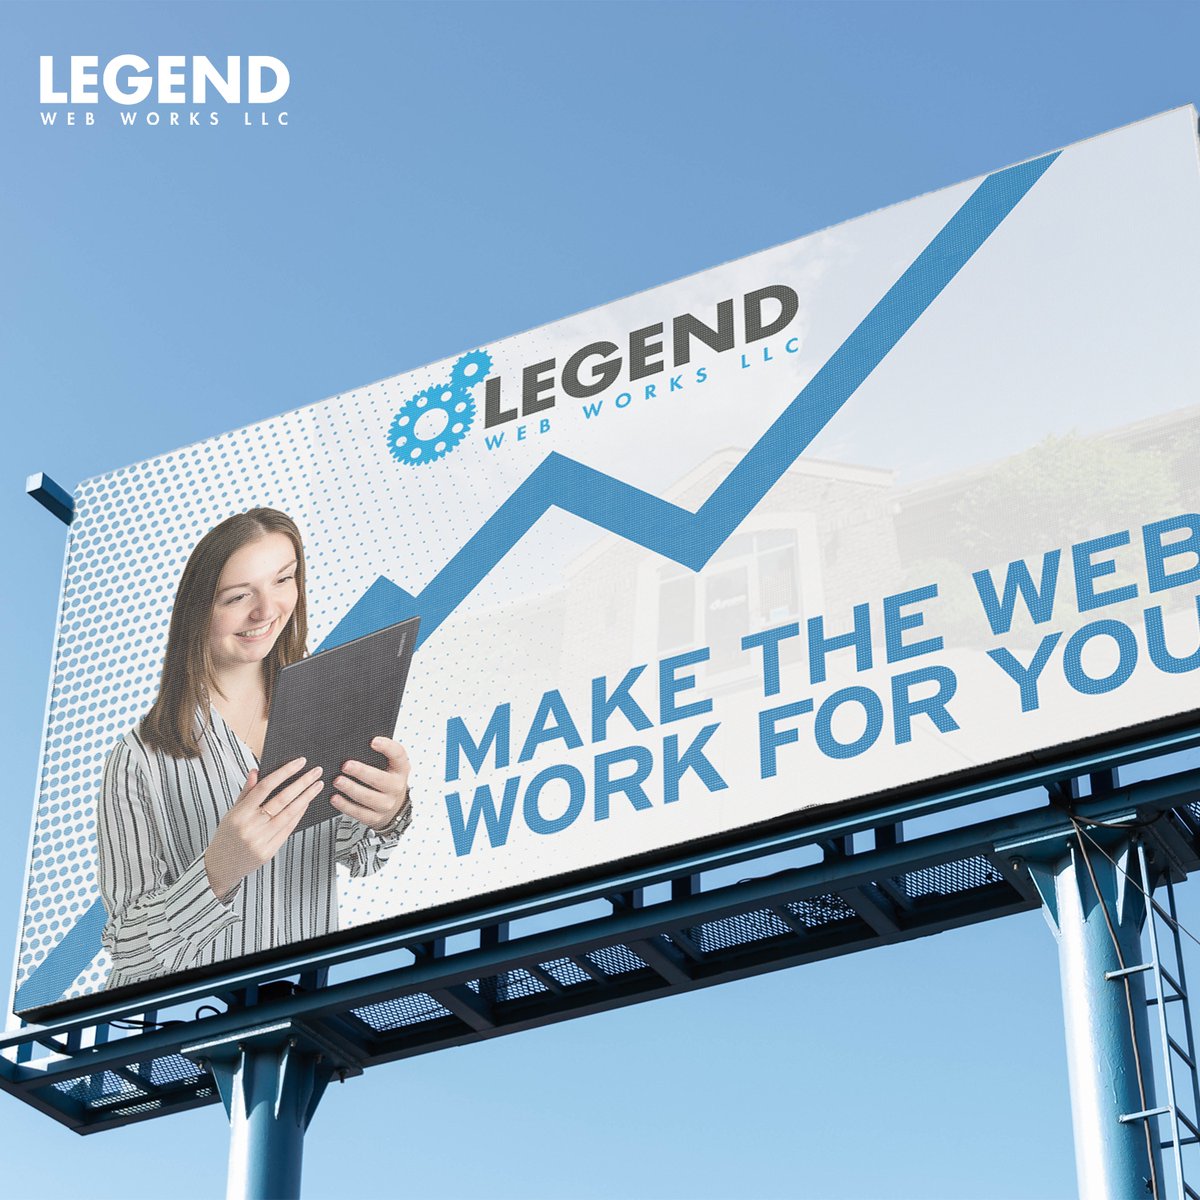 Harness the power of the web with Legend Web Works! 💻

Visit us online to learn more!
legendwebworks.com/about/our-team/ 

#LegendWebWorks #CincinnatiMarketing #CincinnatiWebDesign #Cincinnati #WebDev #SocialMedia #Marketing